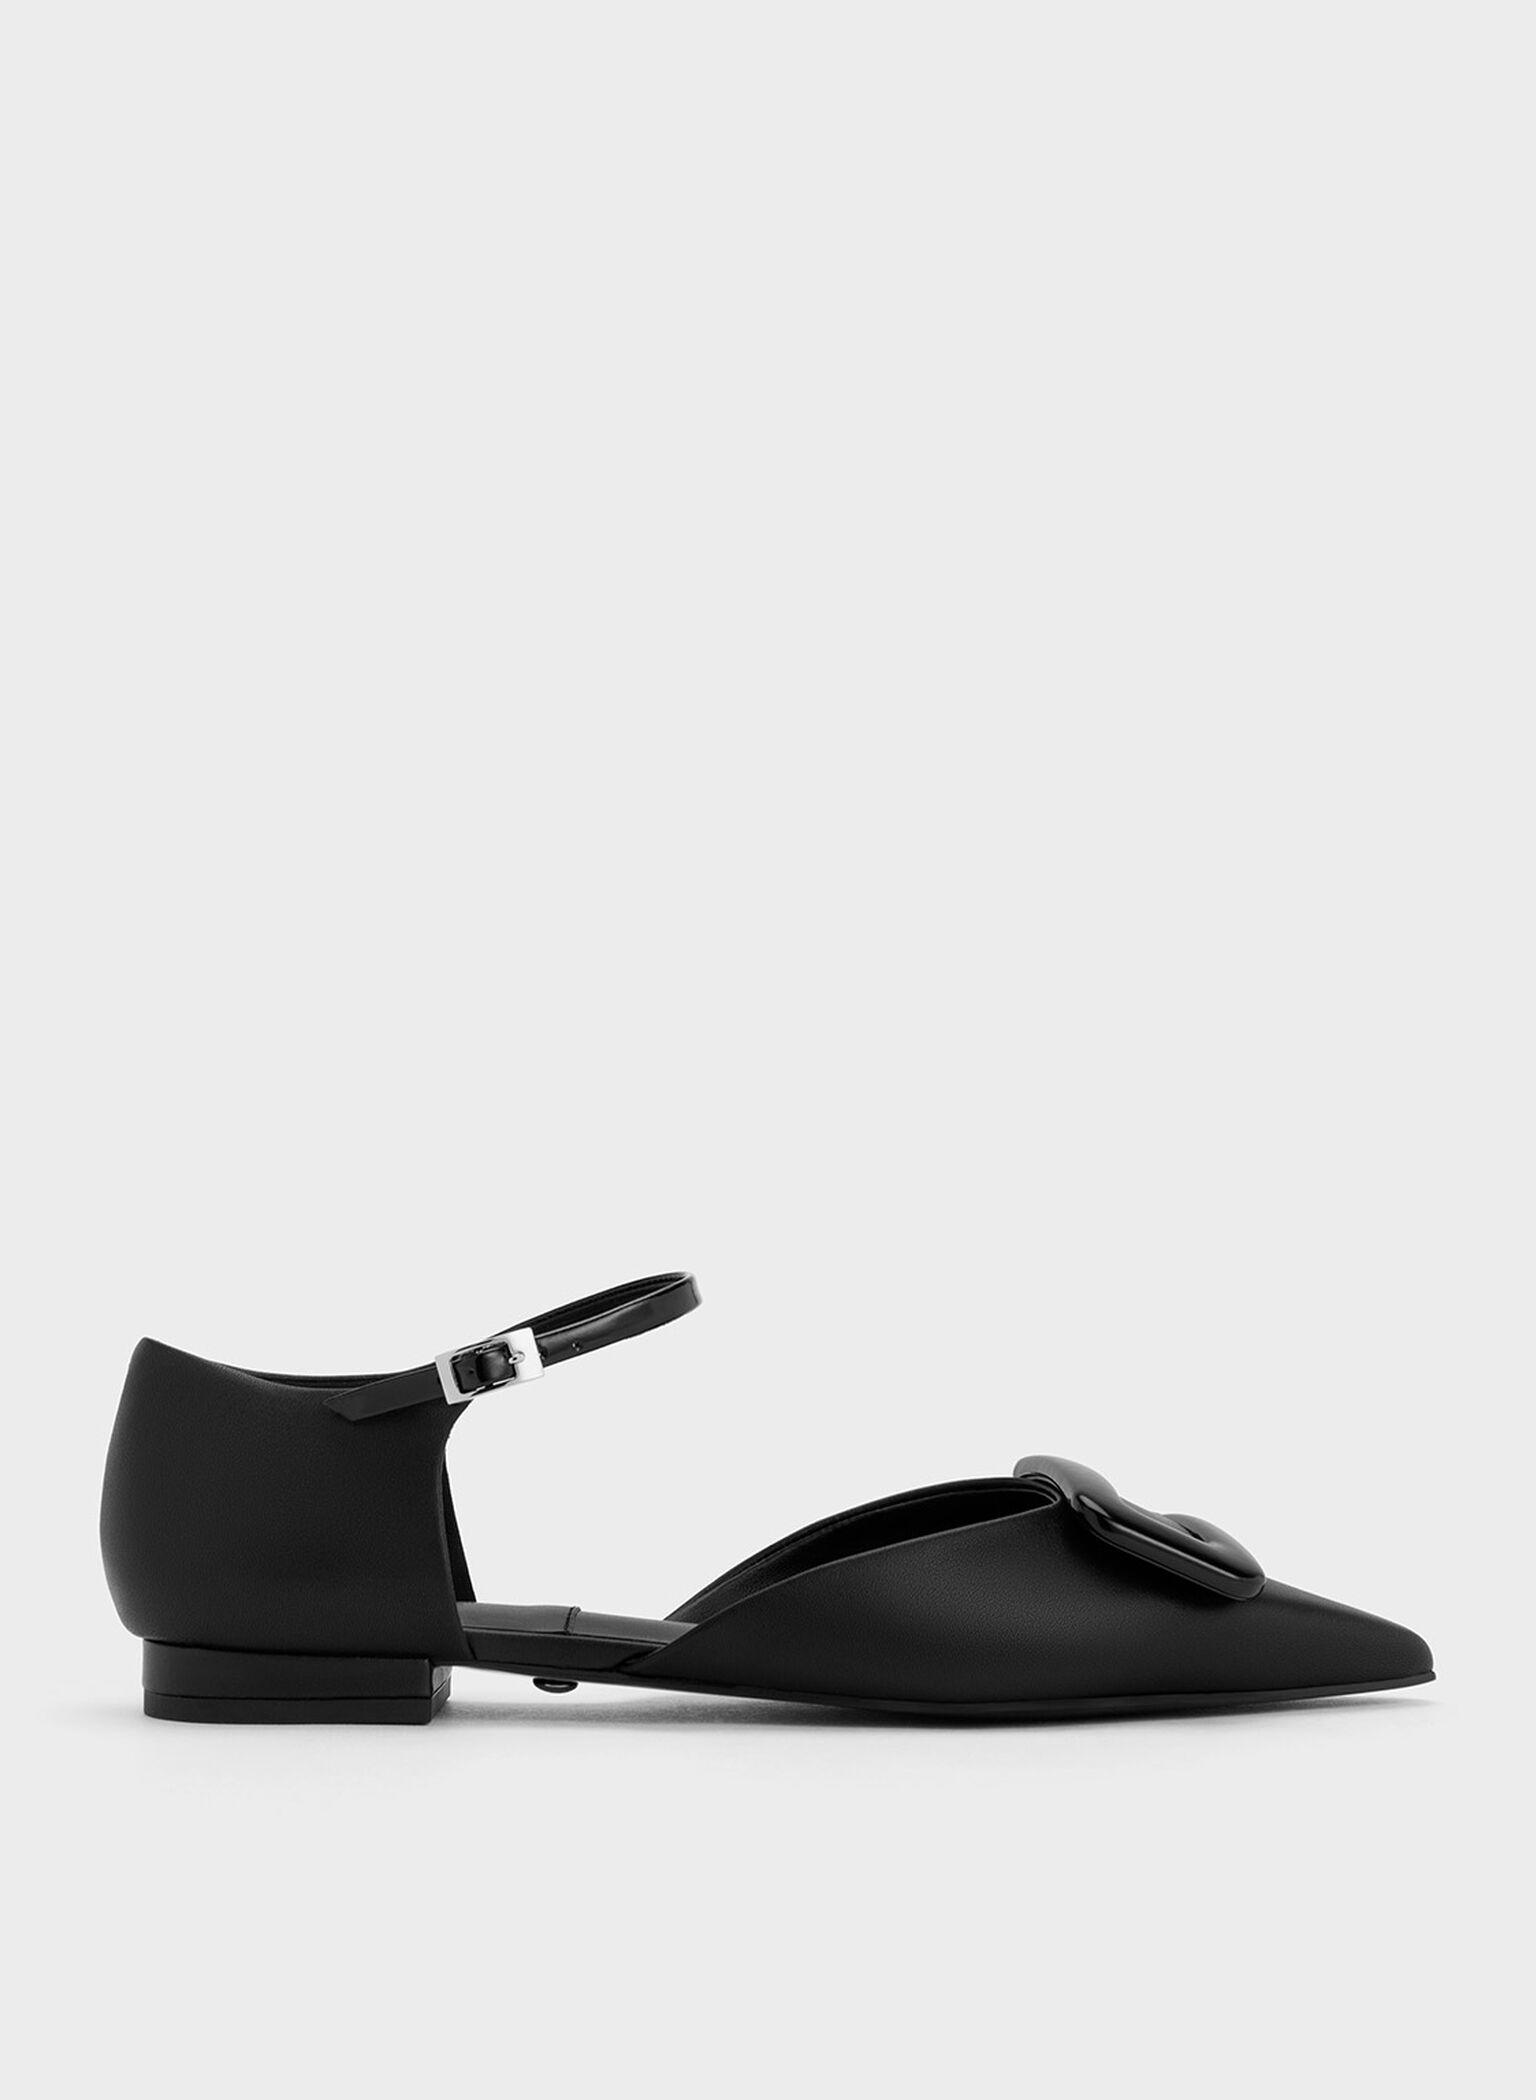 Rosalie Leather D'Orsay Flats, Black, hi-res